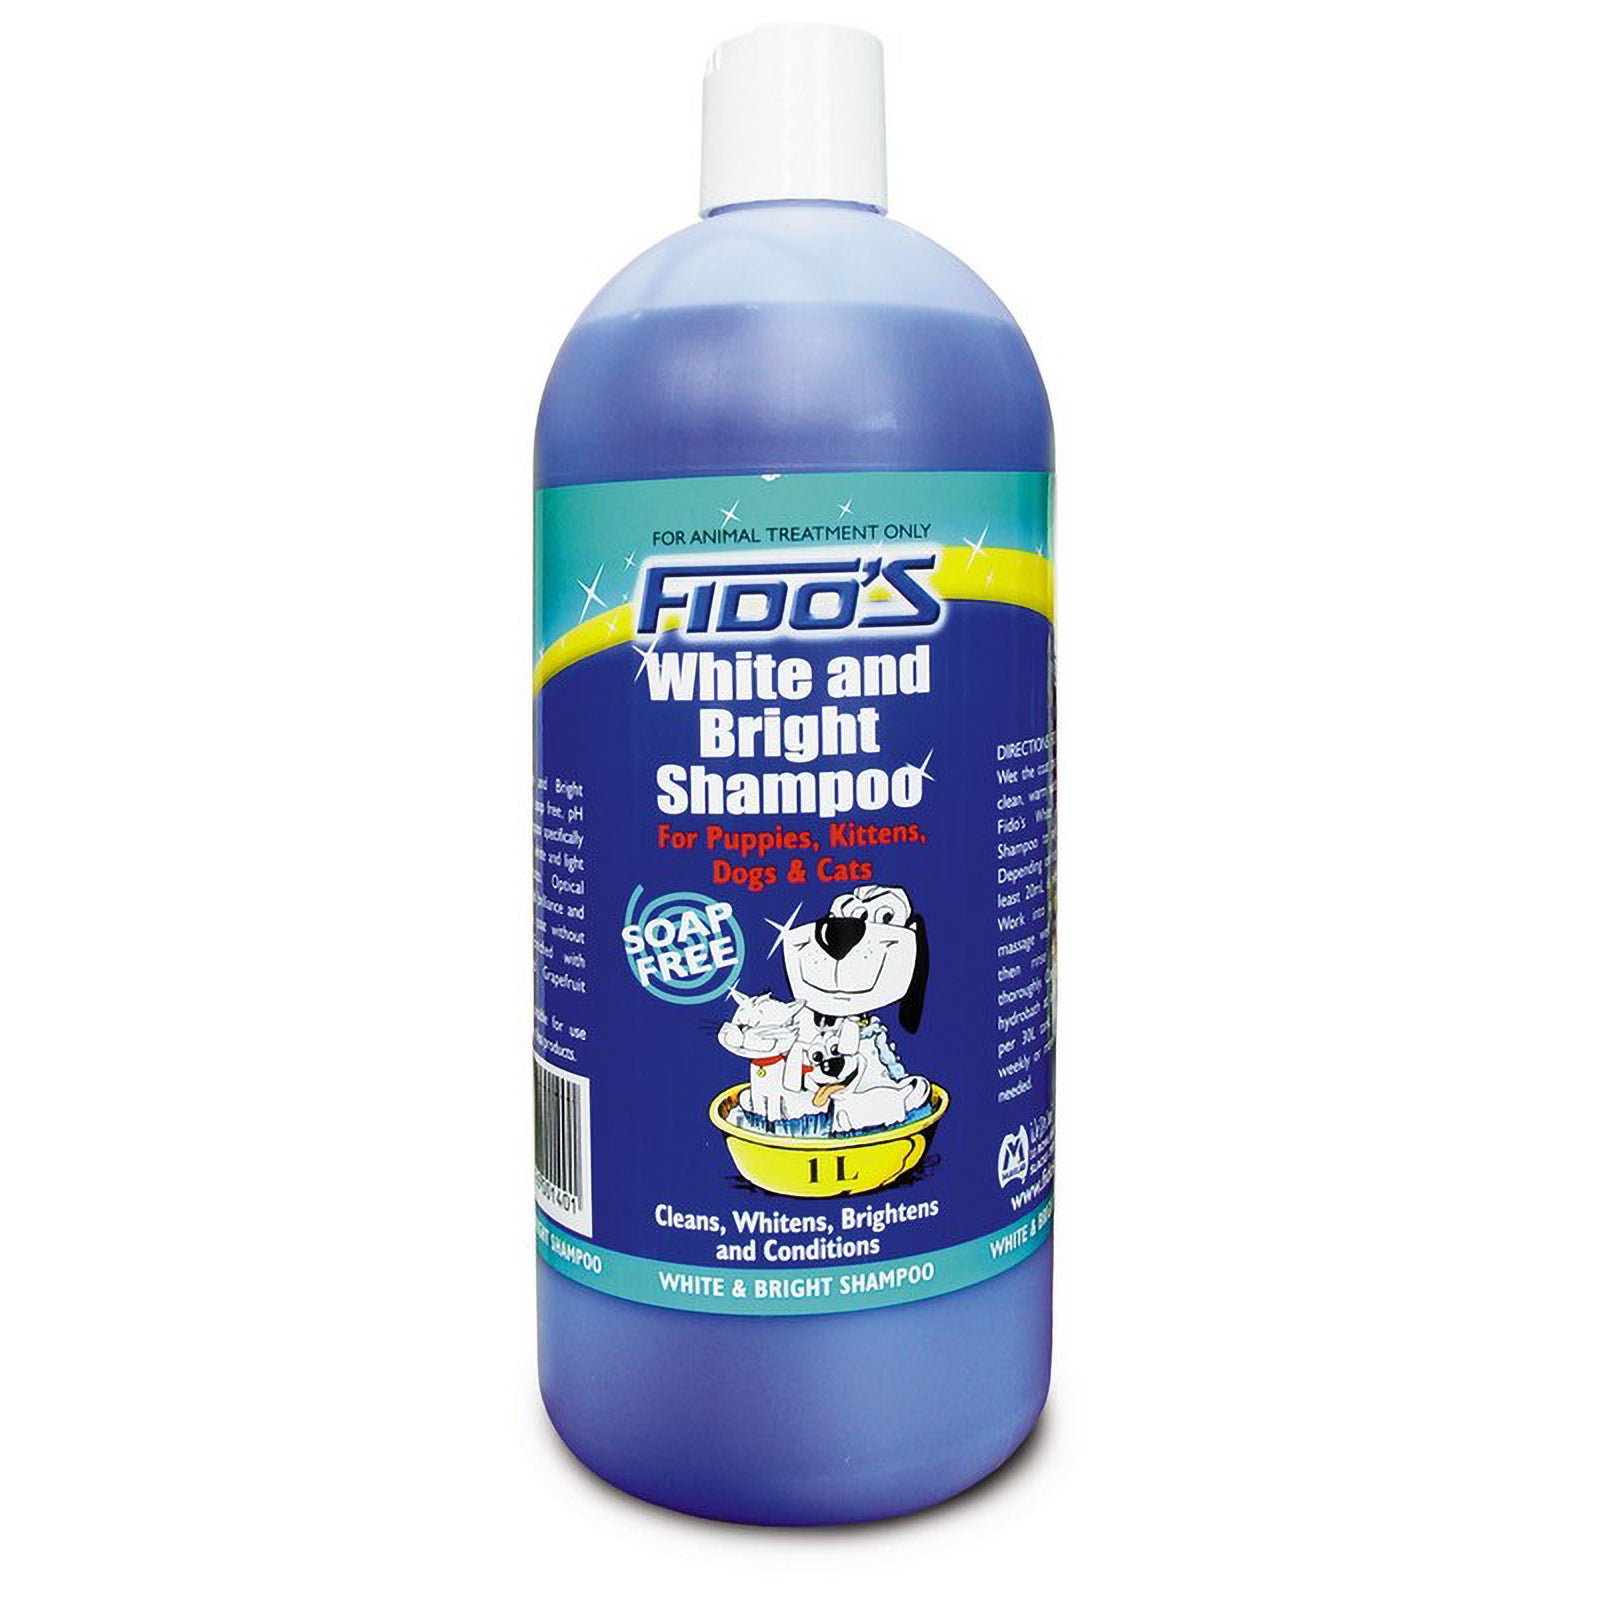 Fido's White & Bright Shampoo for Dogs & Cats